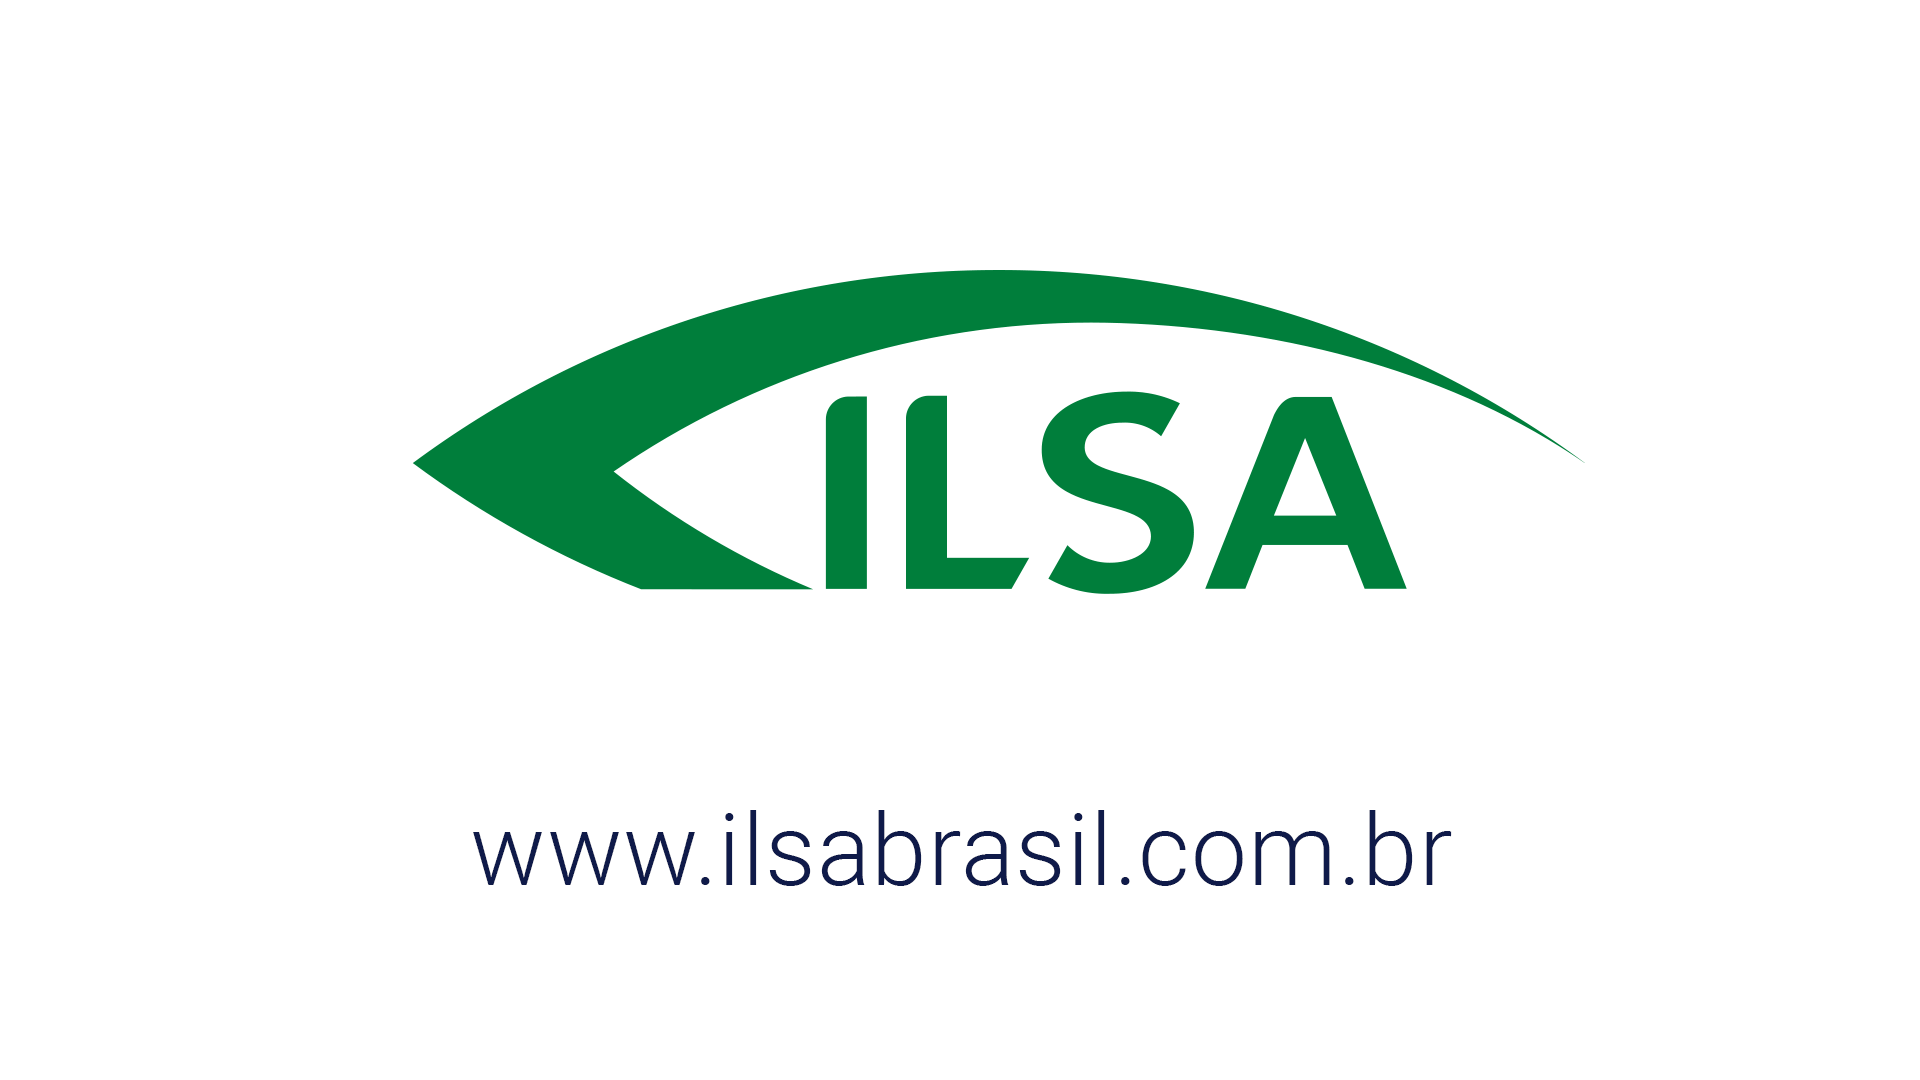 (c) Ilsabrasil.com.br